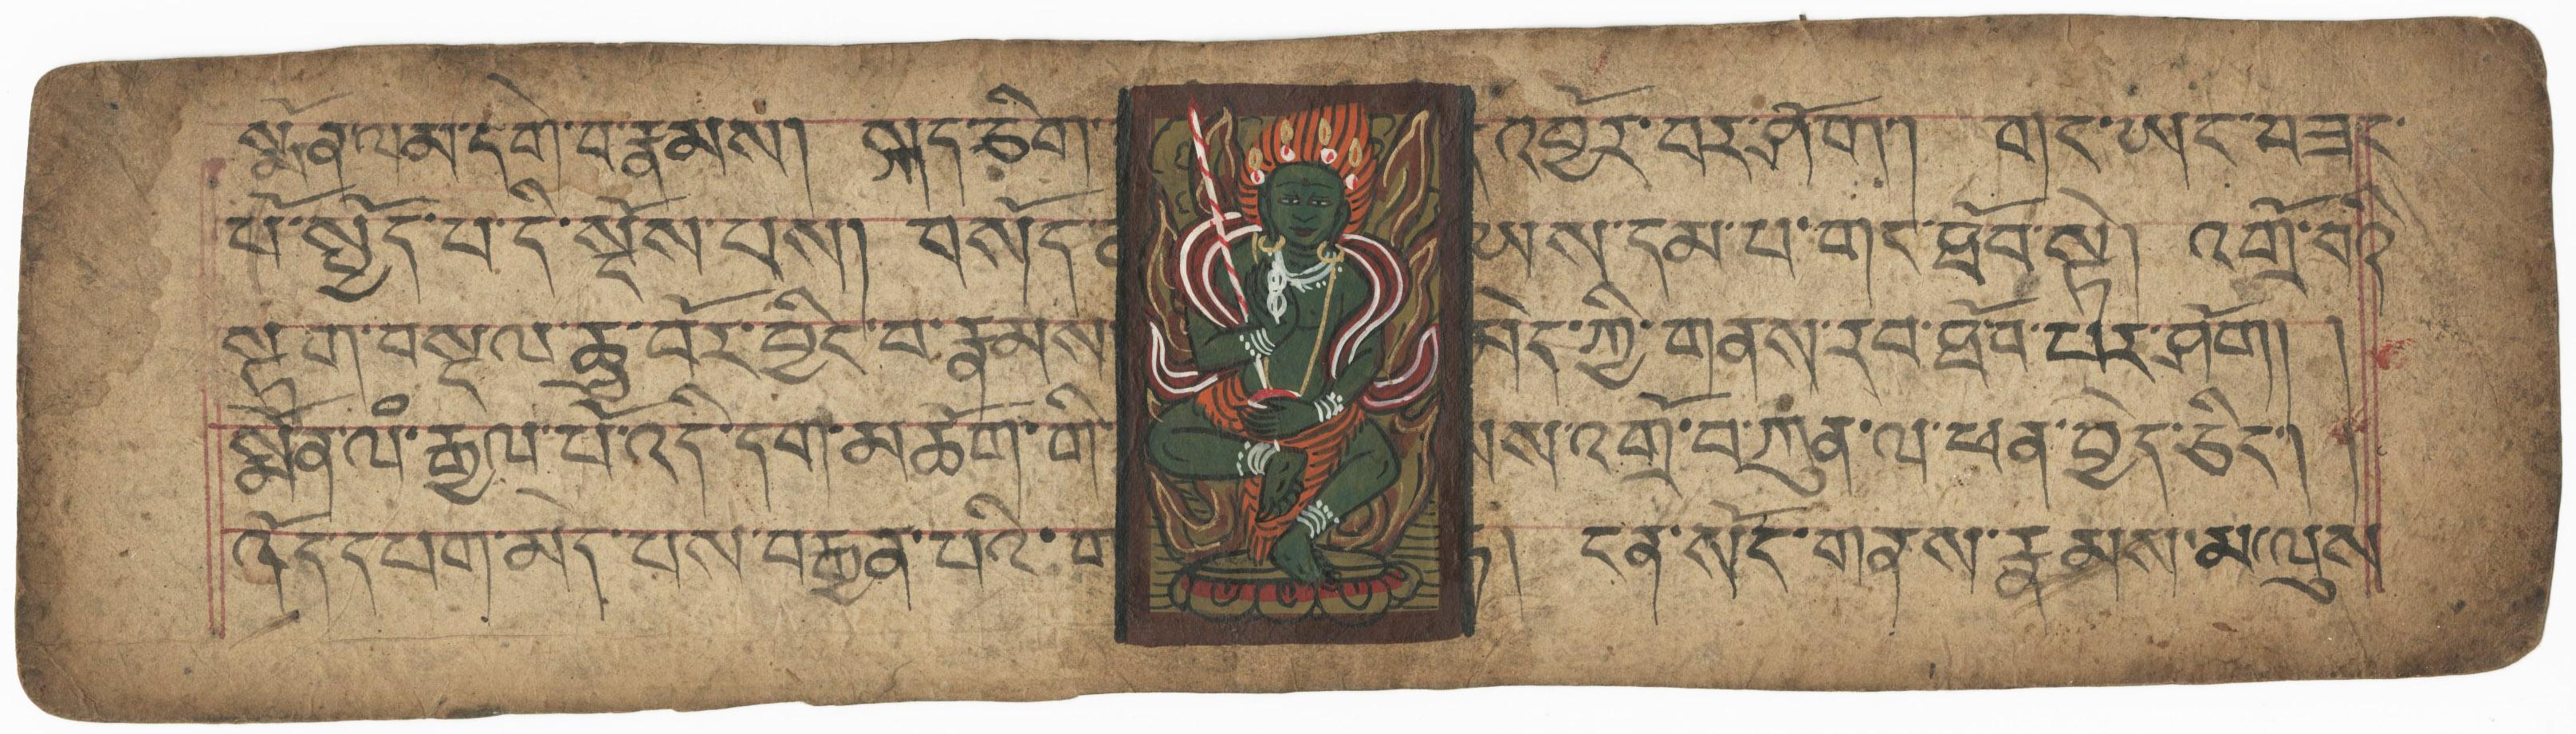 Dharma Prayer Book Manuscript Folio - Art by Unknown Tibetan